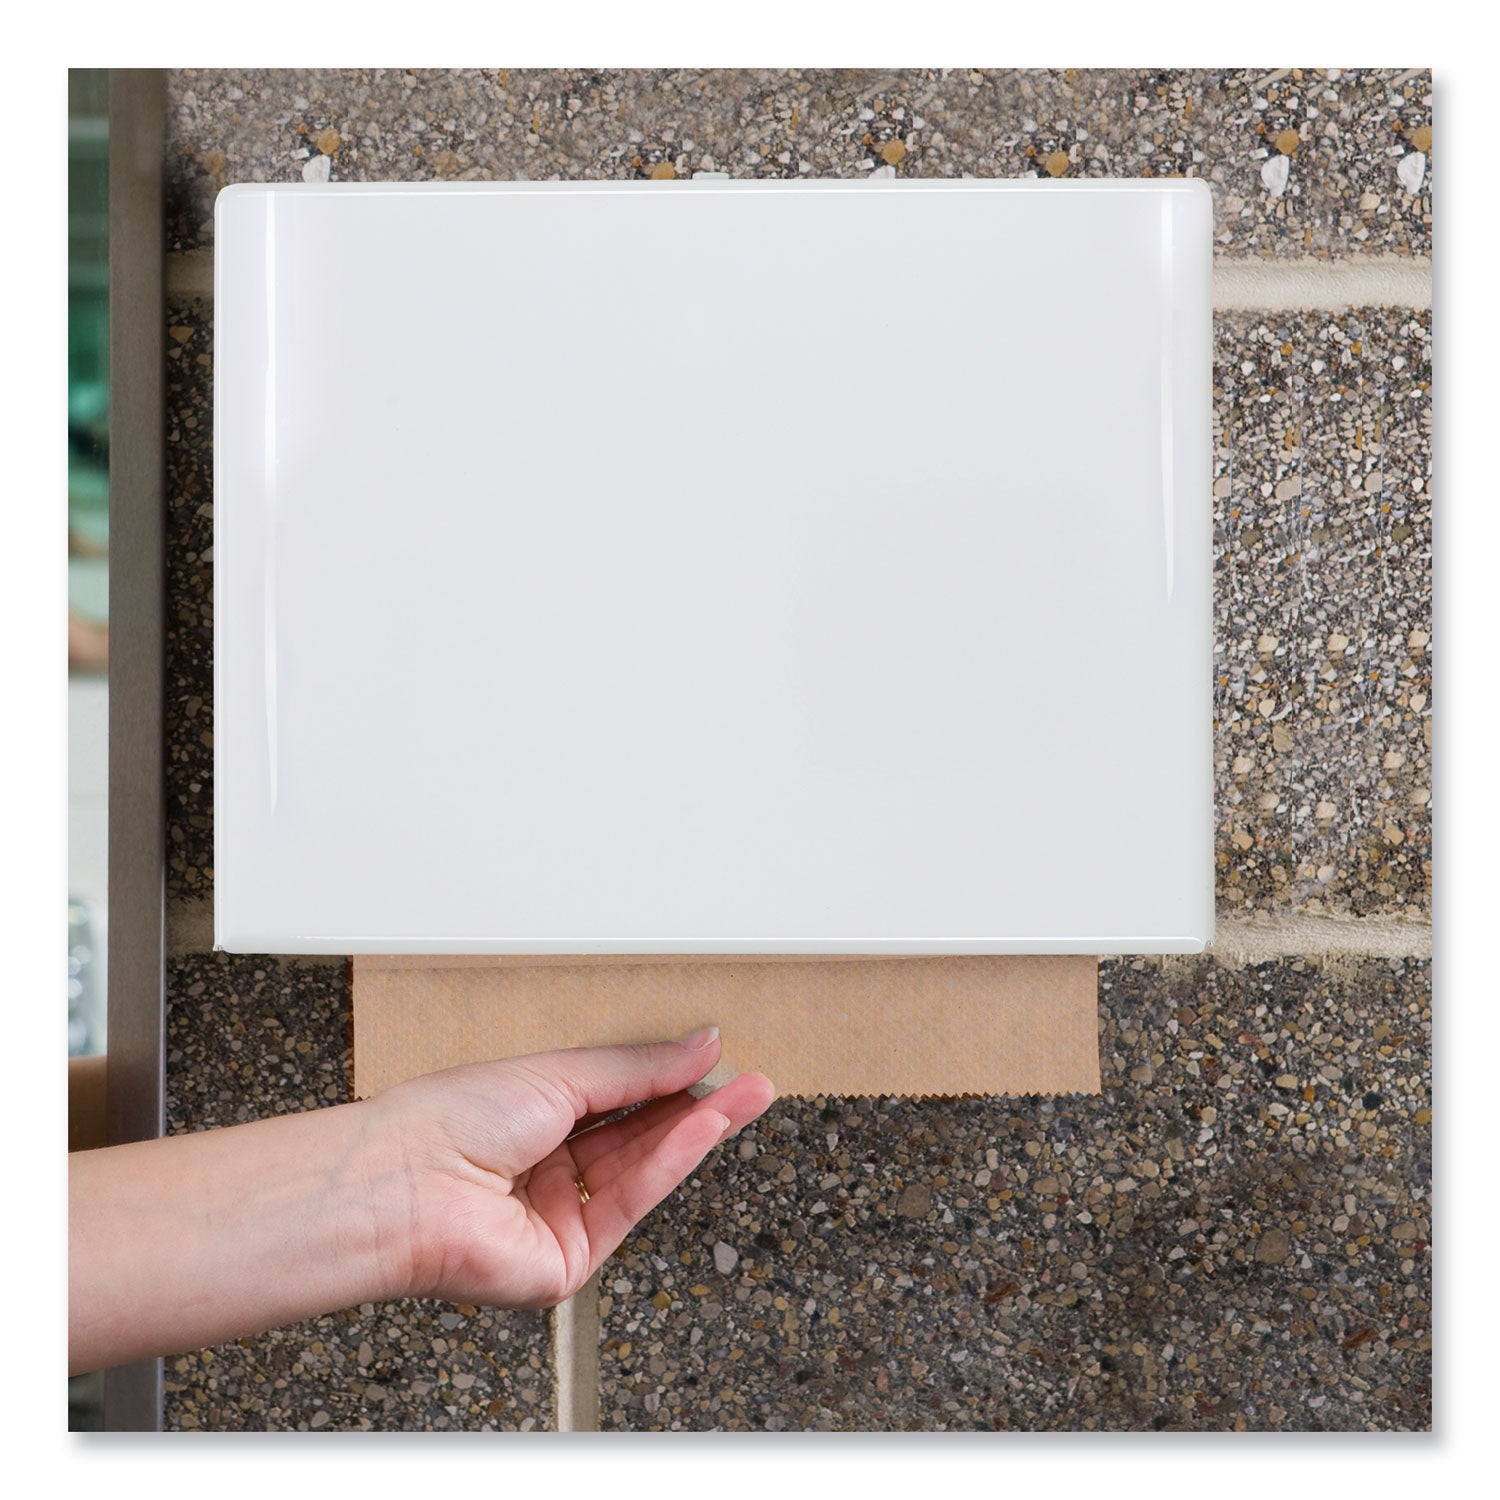 singlefold-hand-towel-dispenser-1175-x-575-x-925-white_trk70wm1 - 6